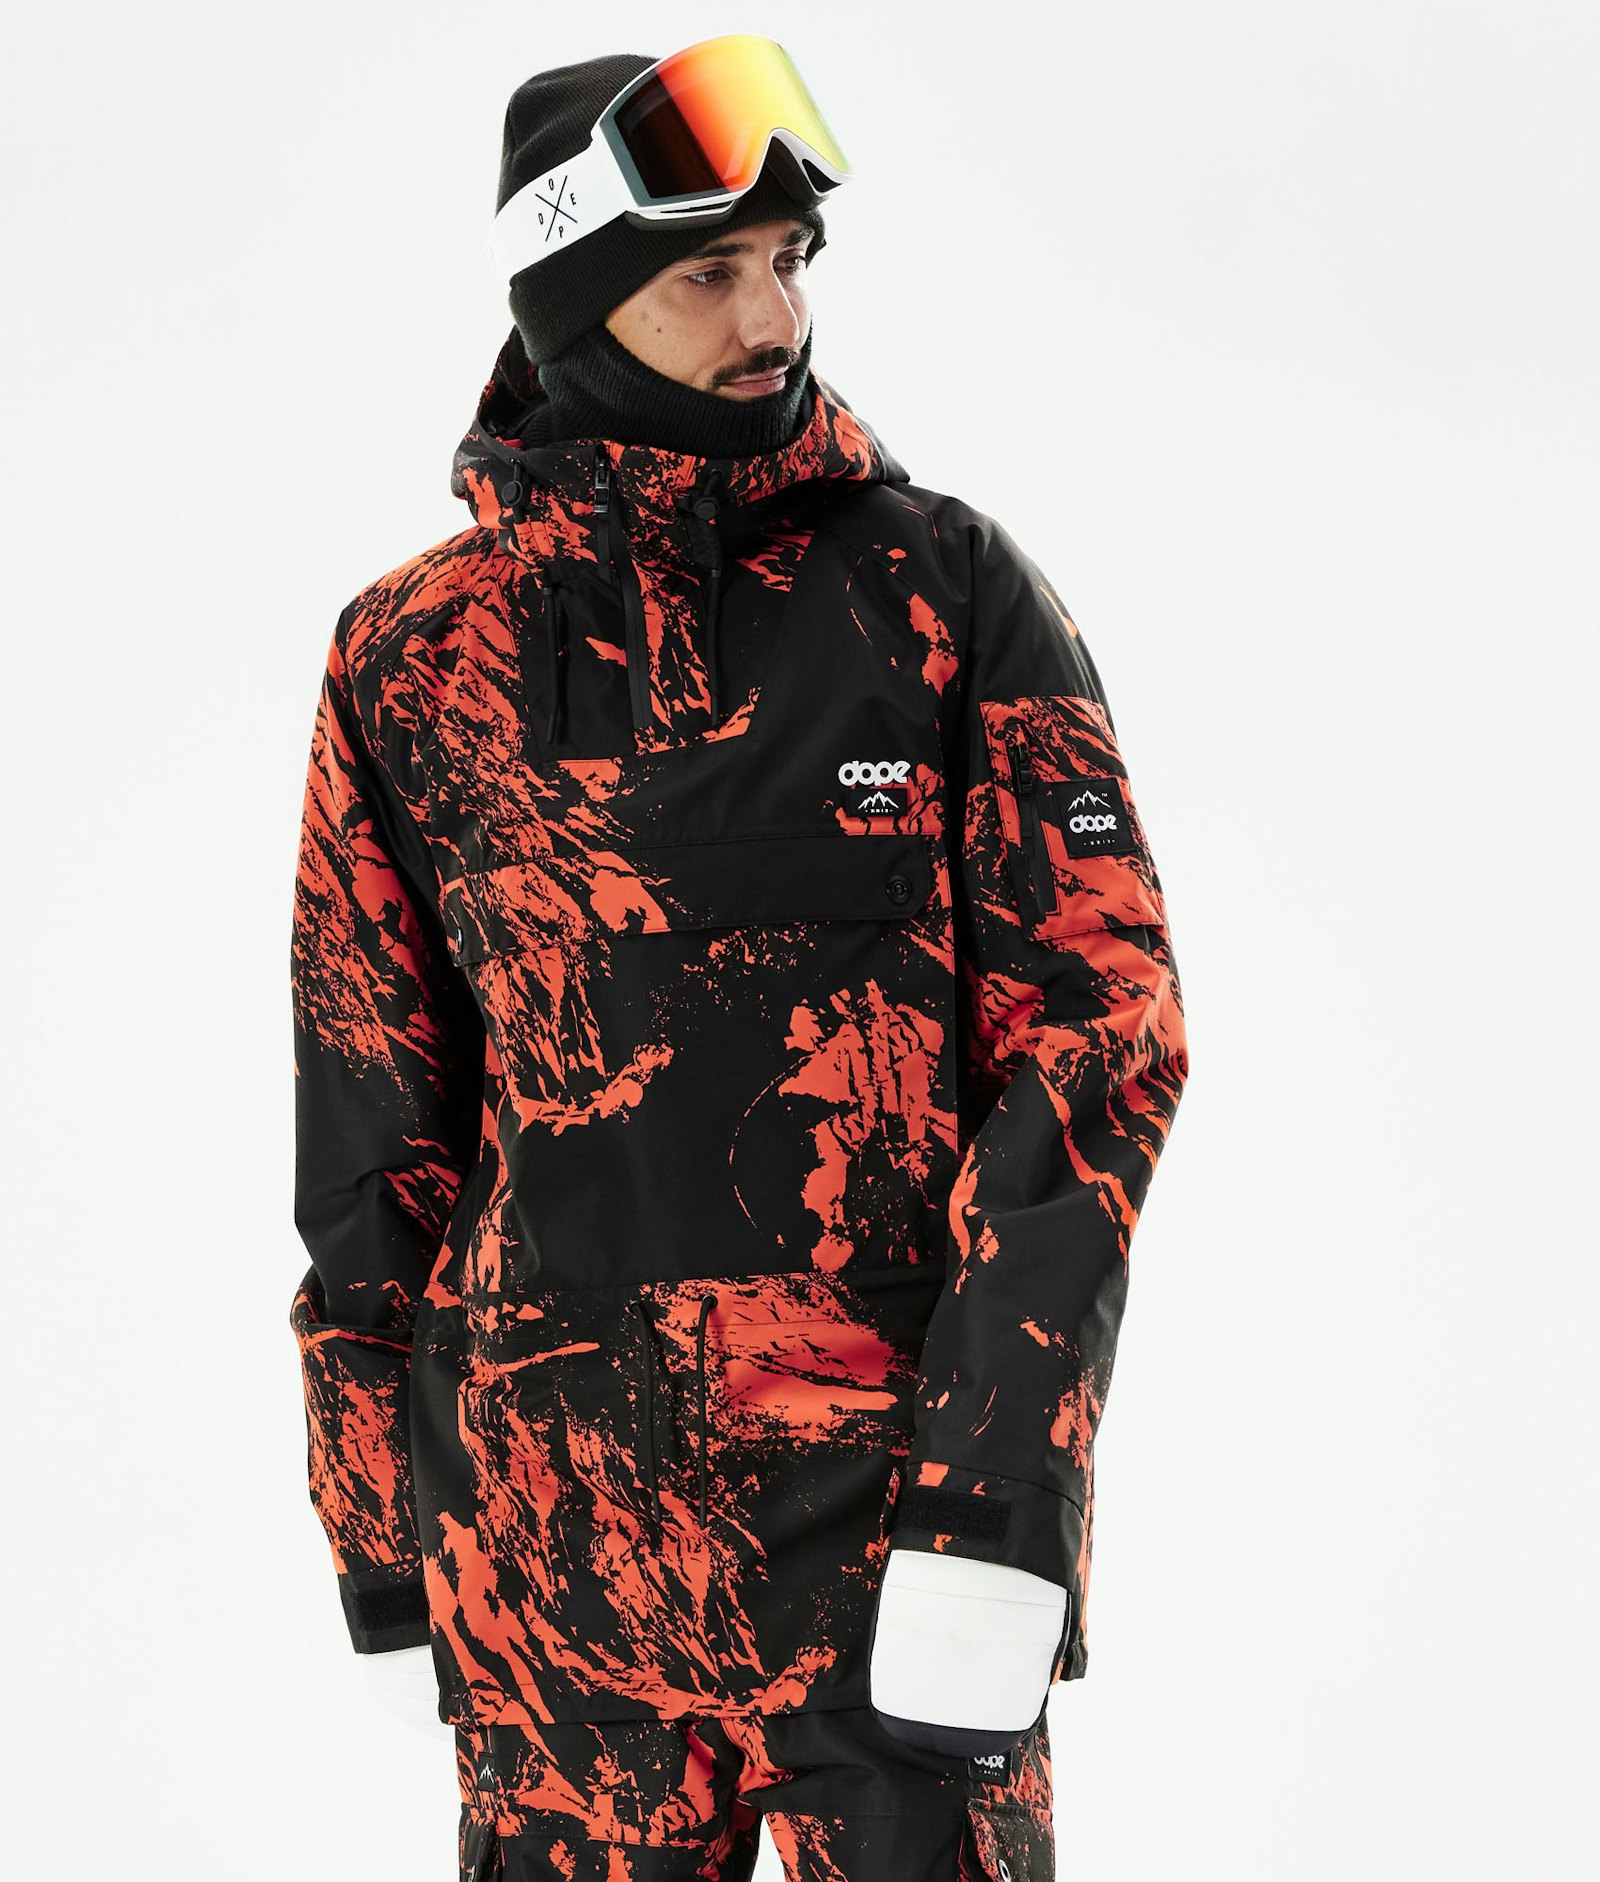 Annok 2021 Veste Snowboard Homme Paint Orange